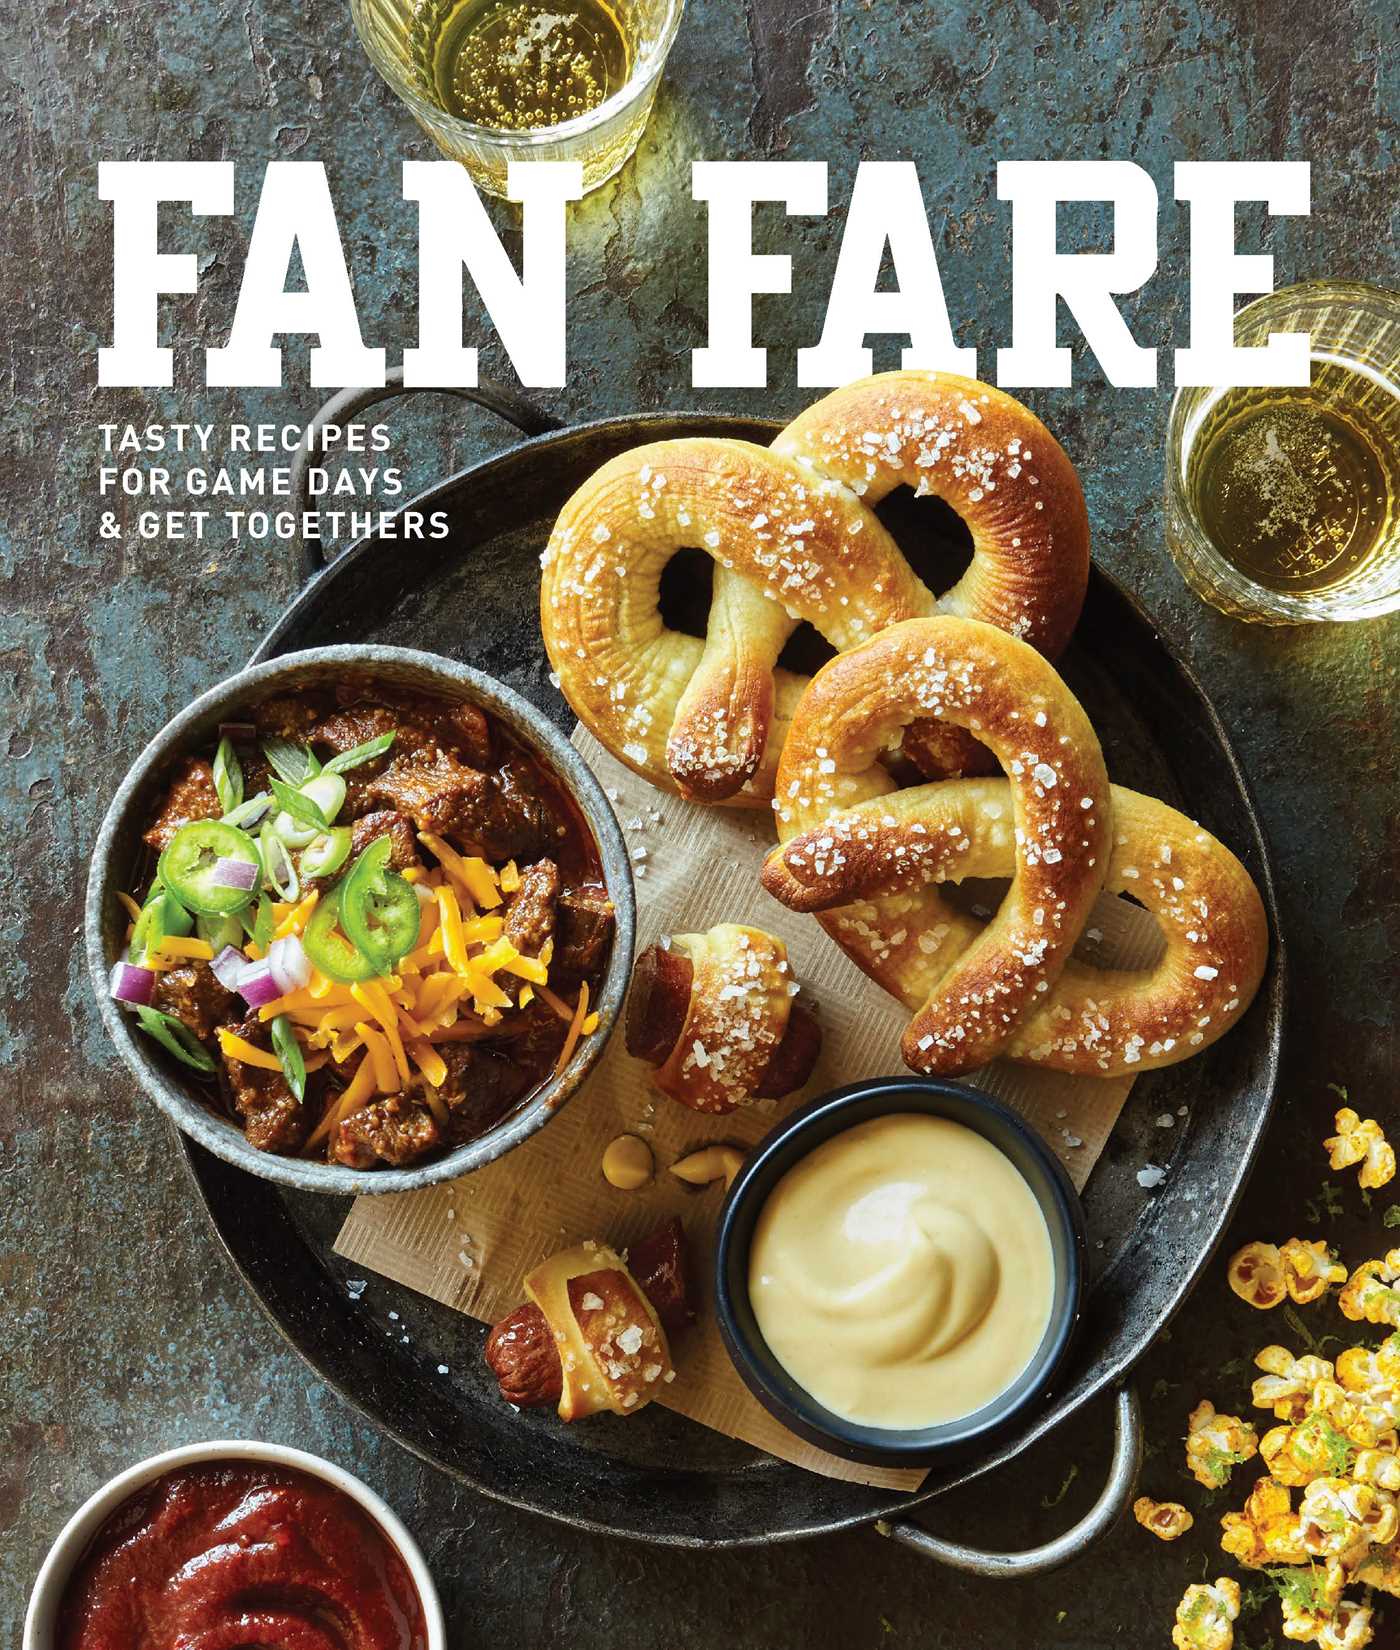 Fan Fare Cooking book